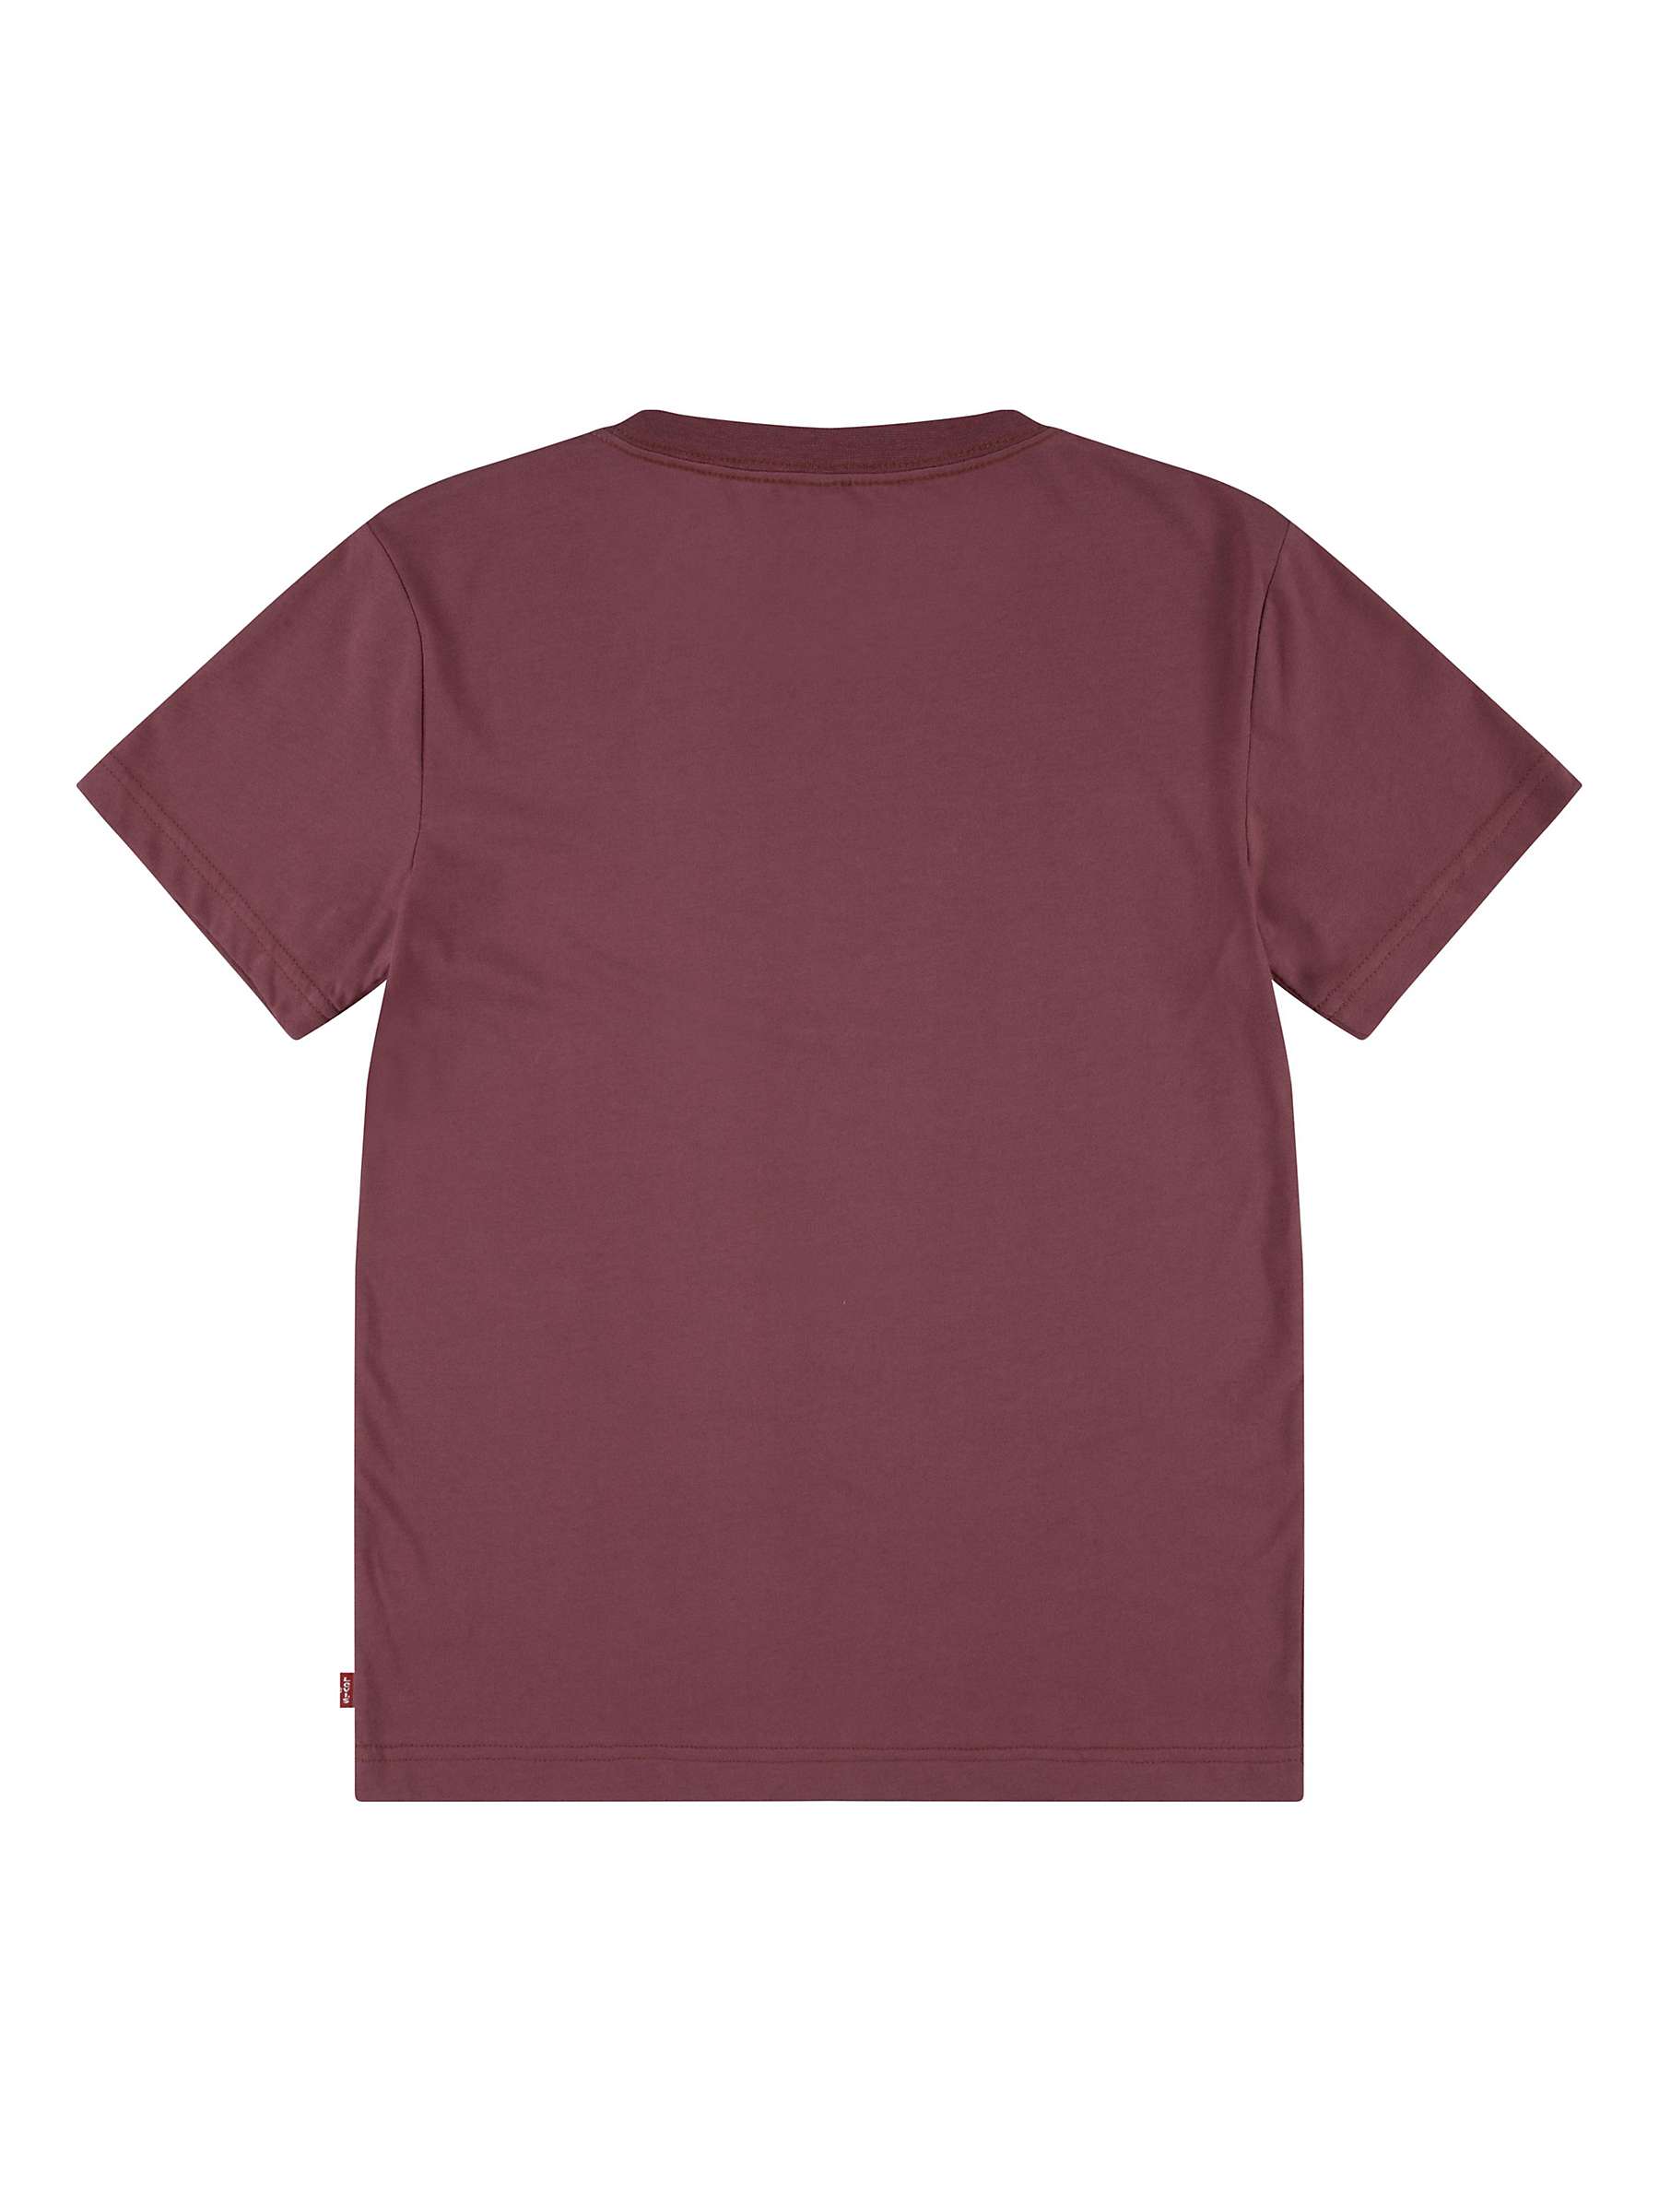 Buy Levi's Kids' All Natural Logo T-Shirt, Roan Rouge Online at johnlewis.com